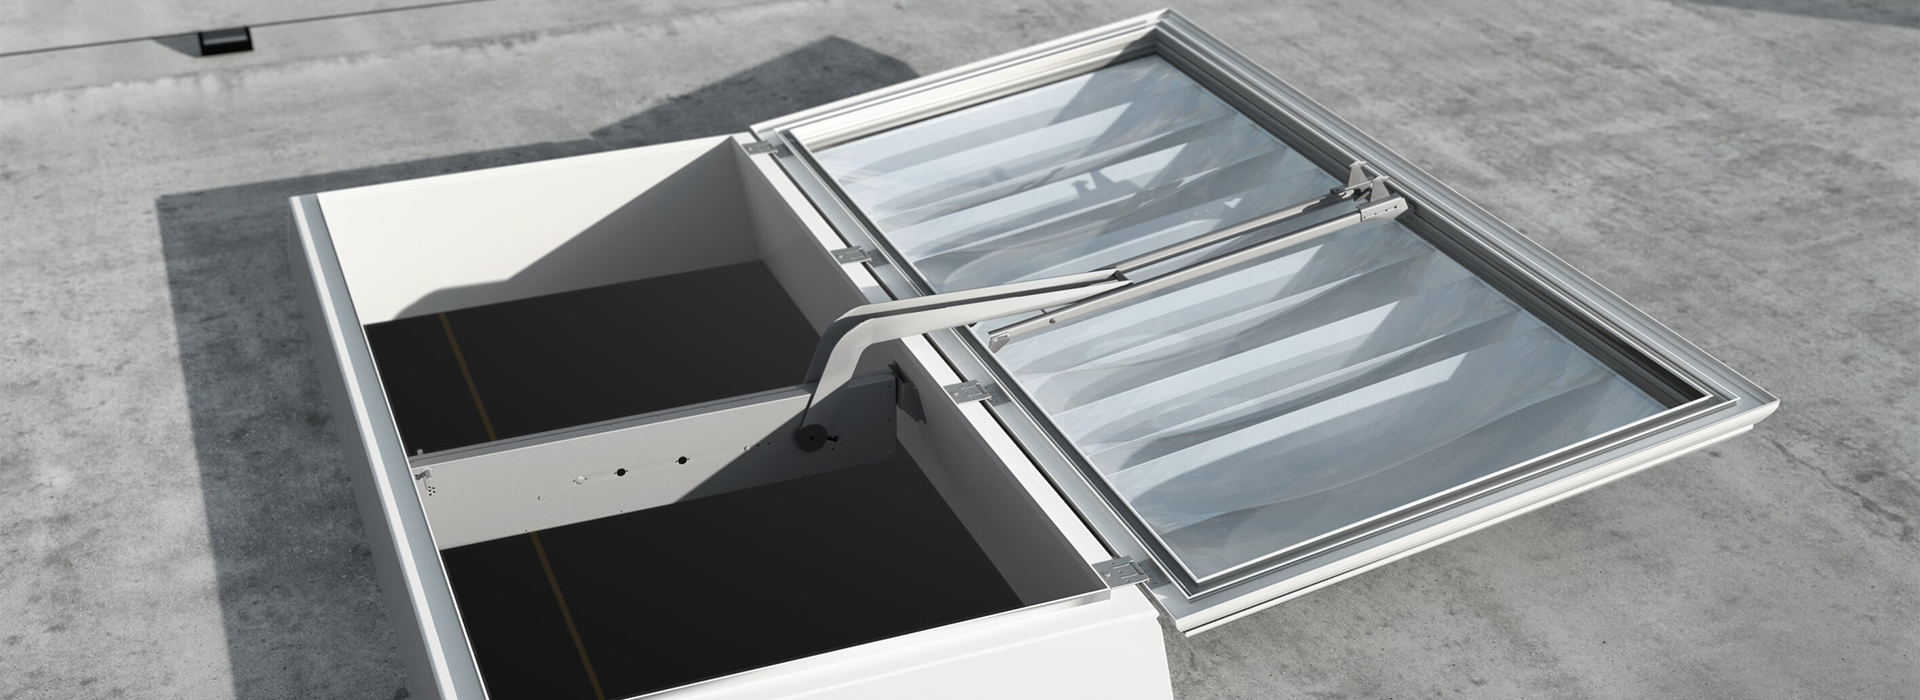 Polycarbonate smoke ventilation rooflight open